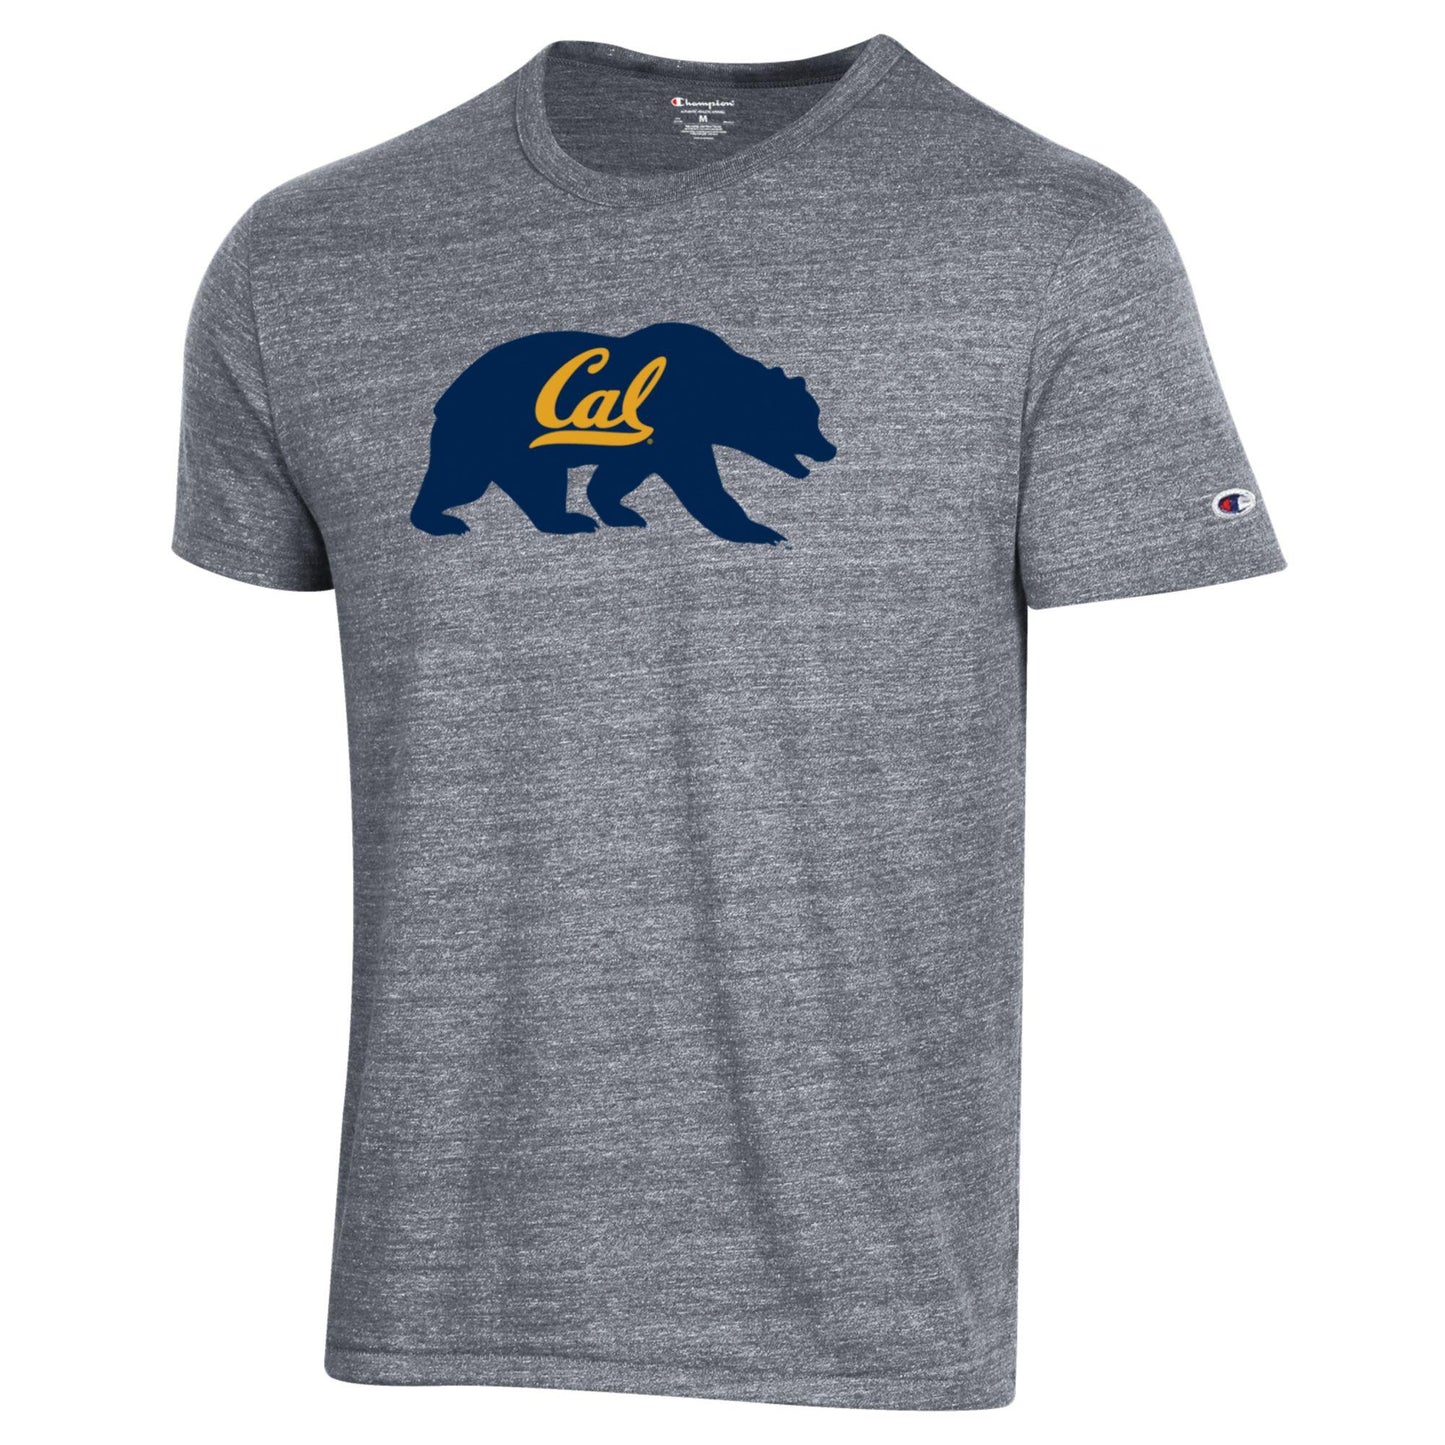 U.C. Berkeley Cal Champion tri blend T-shirt-Gray-Shop College Wear